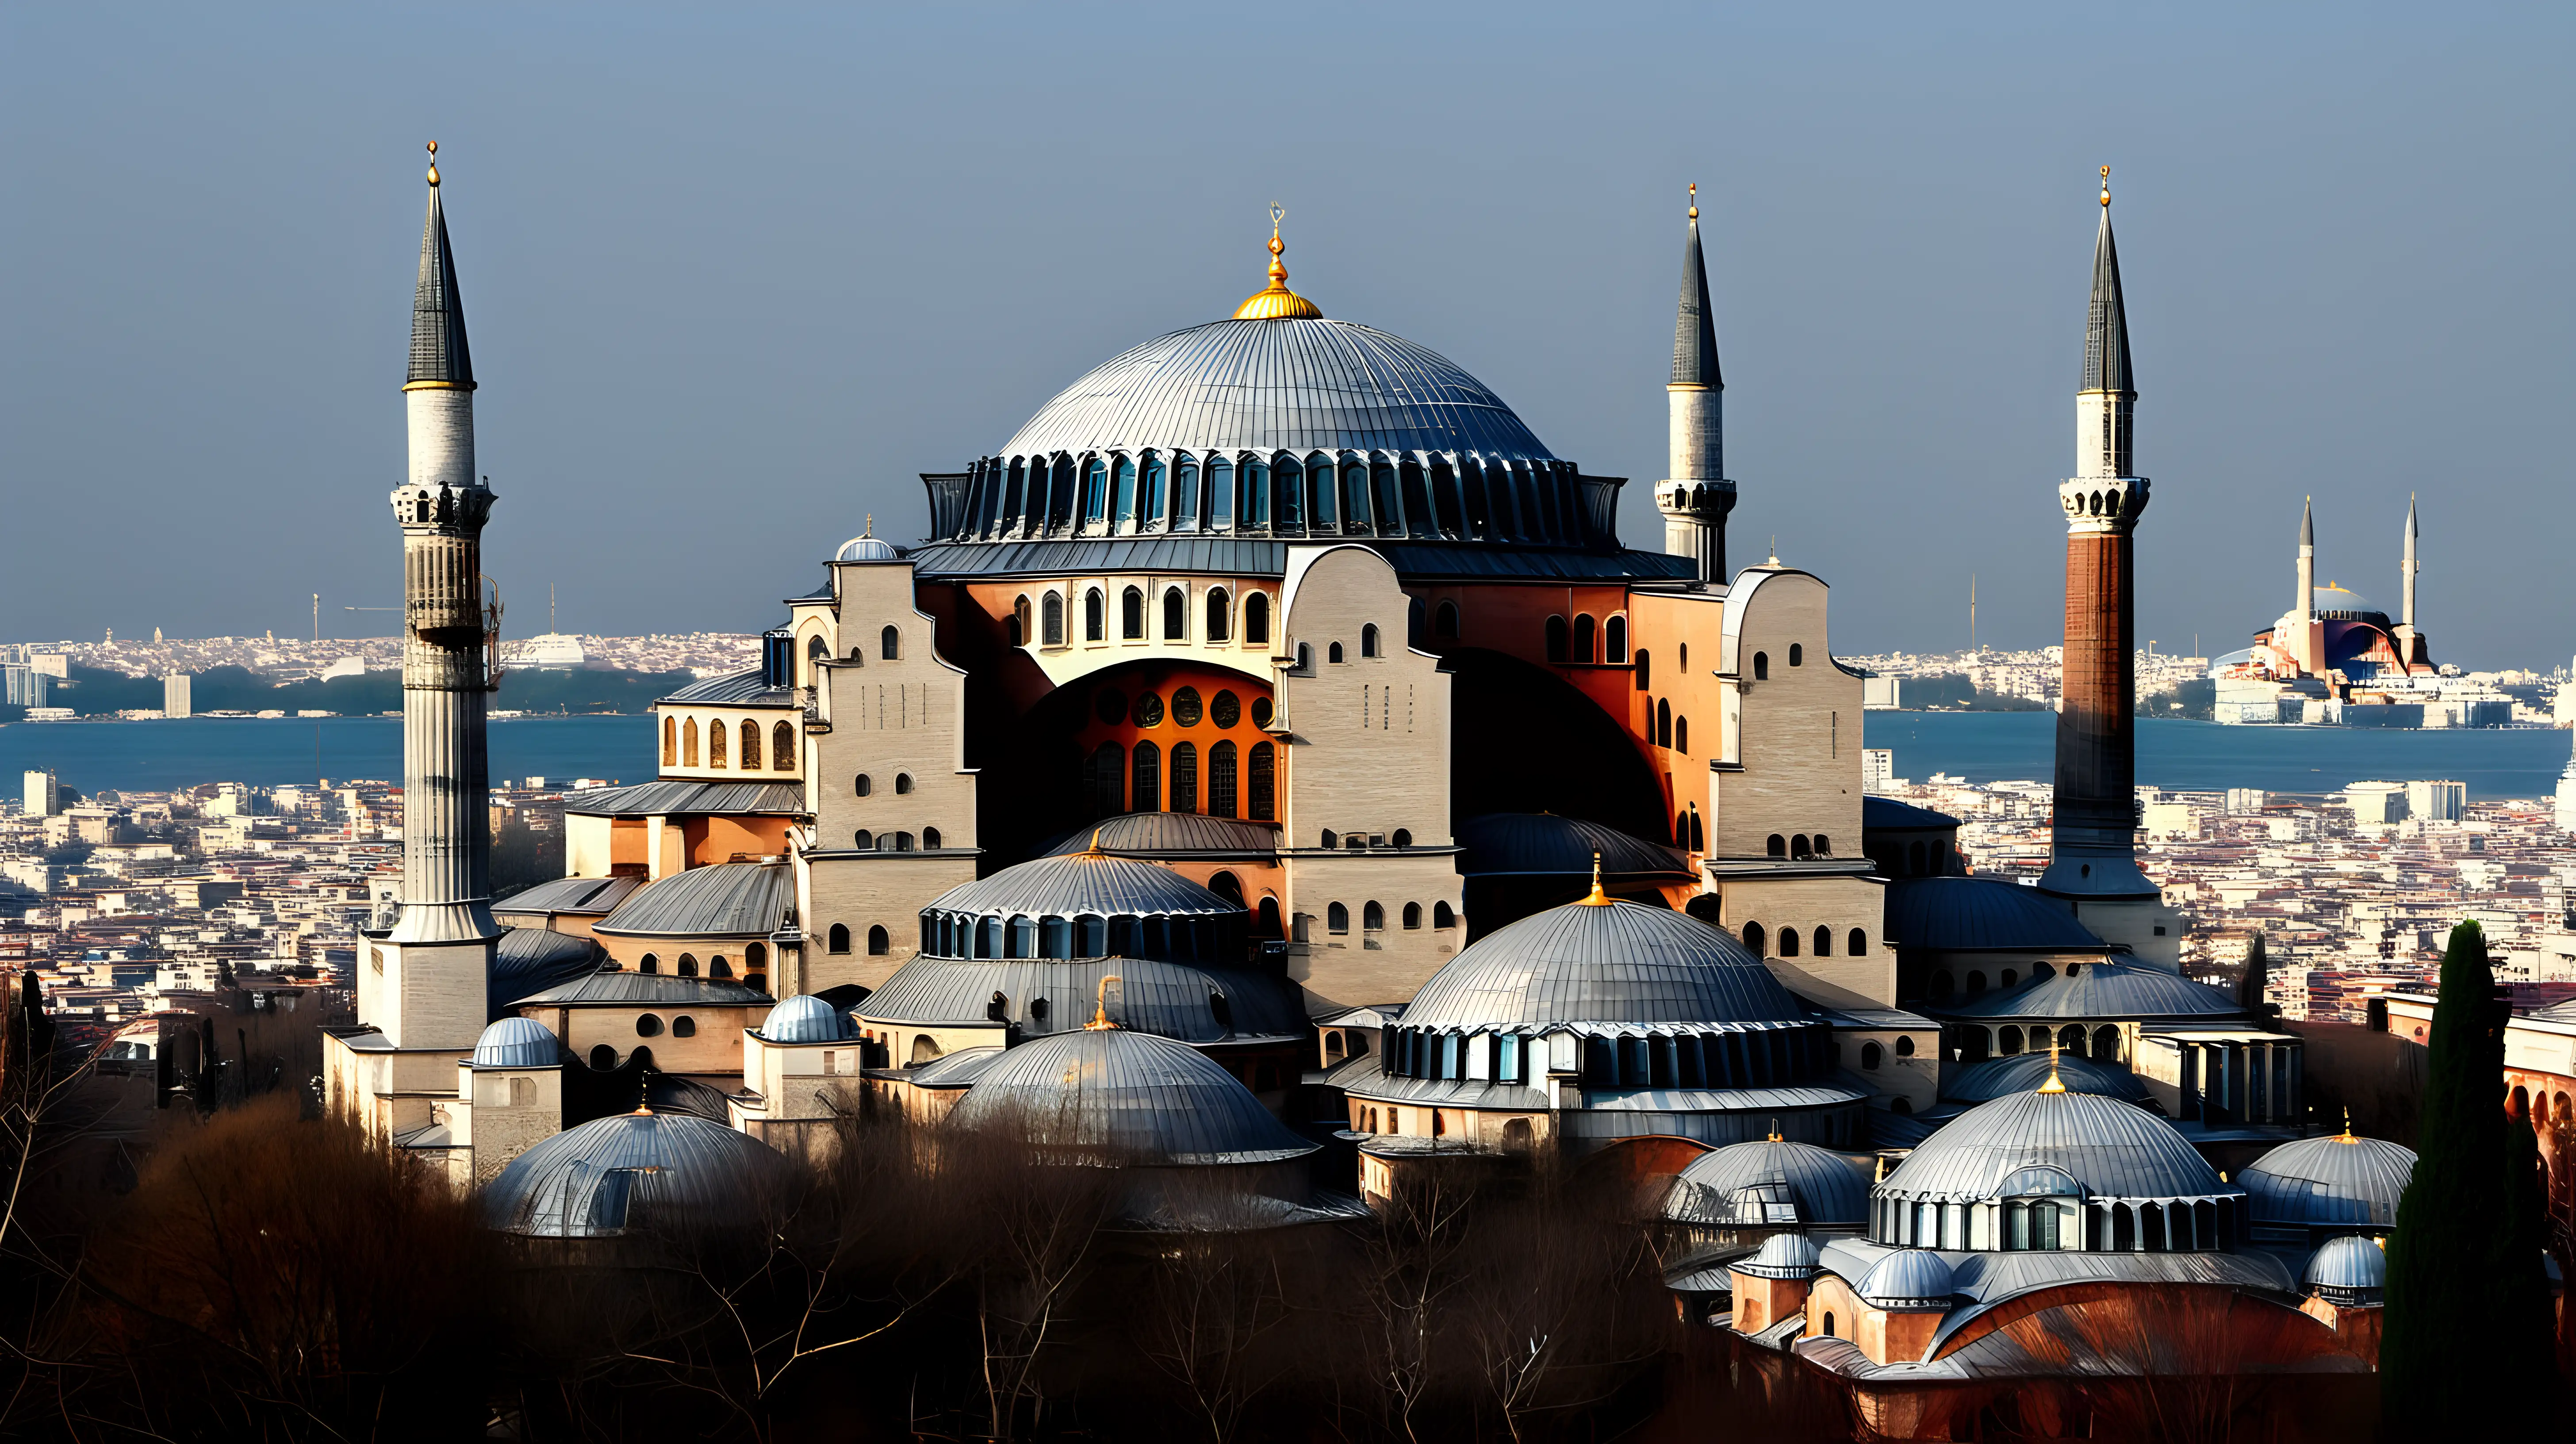 Hagia Sophia Stunning Beauty and Glory Captured in Splendor